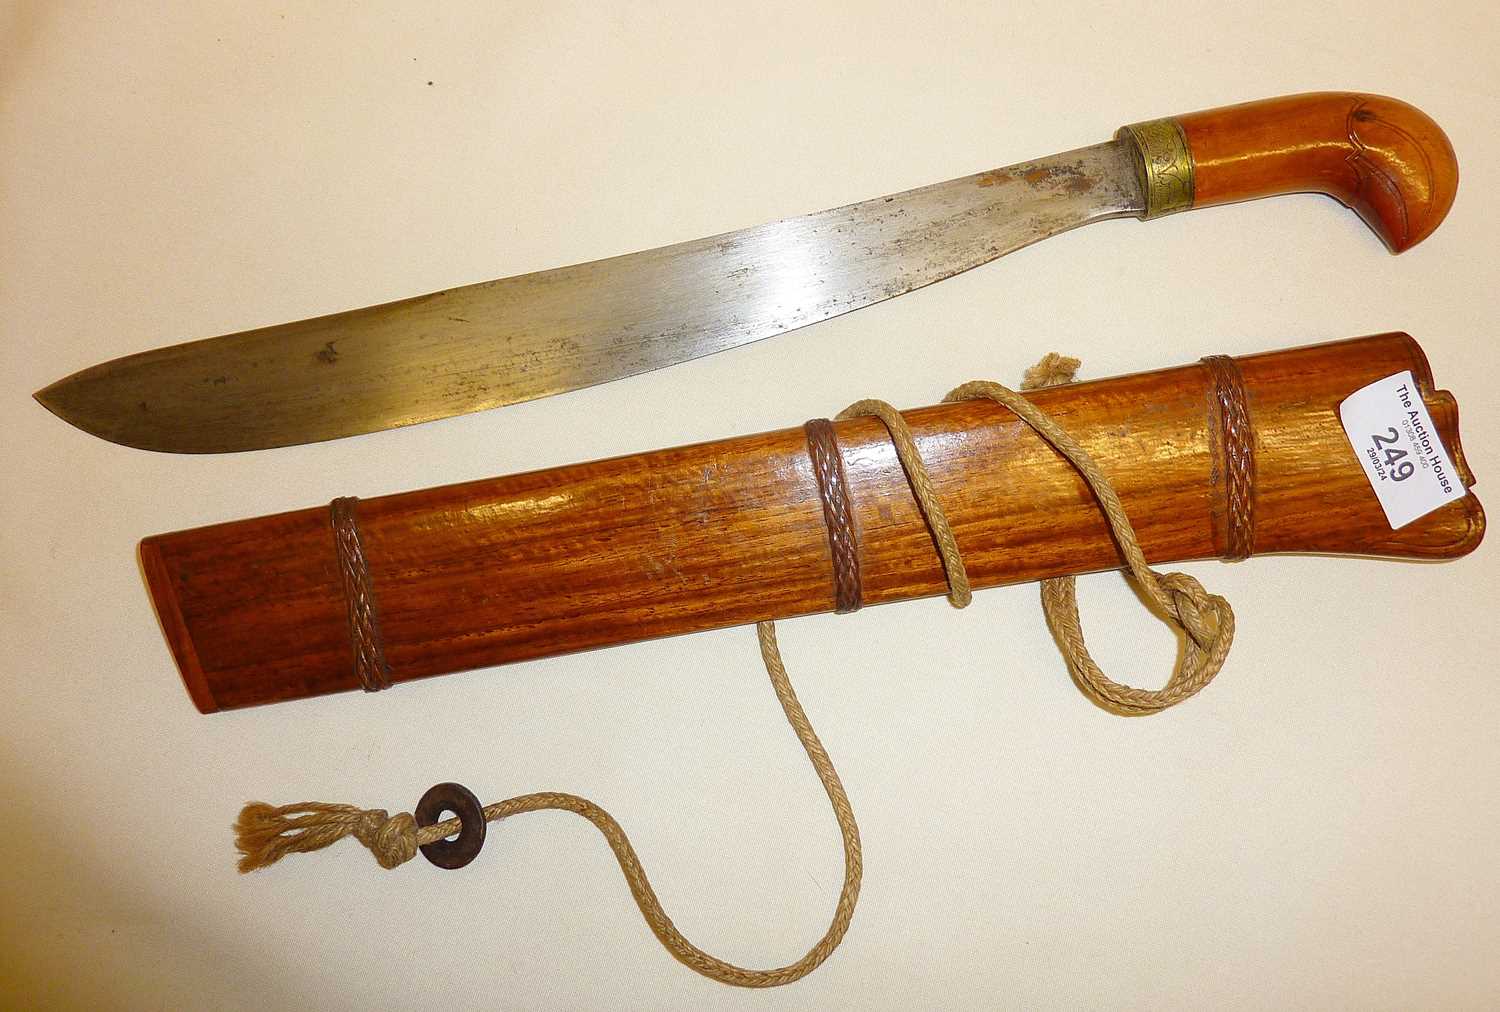 Kachin Dha Burmese sword in wooden scabbard (approx. 43cm long) - Image 2 of 2